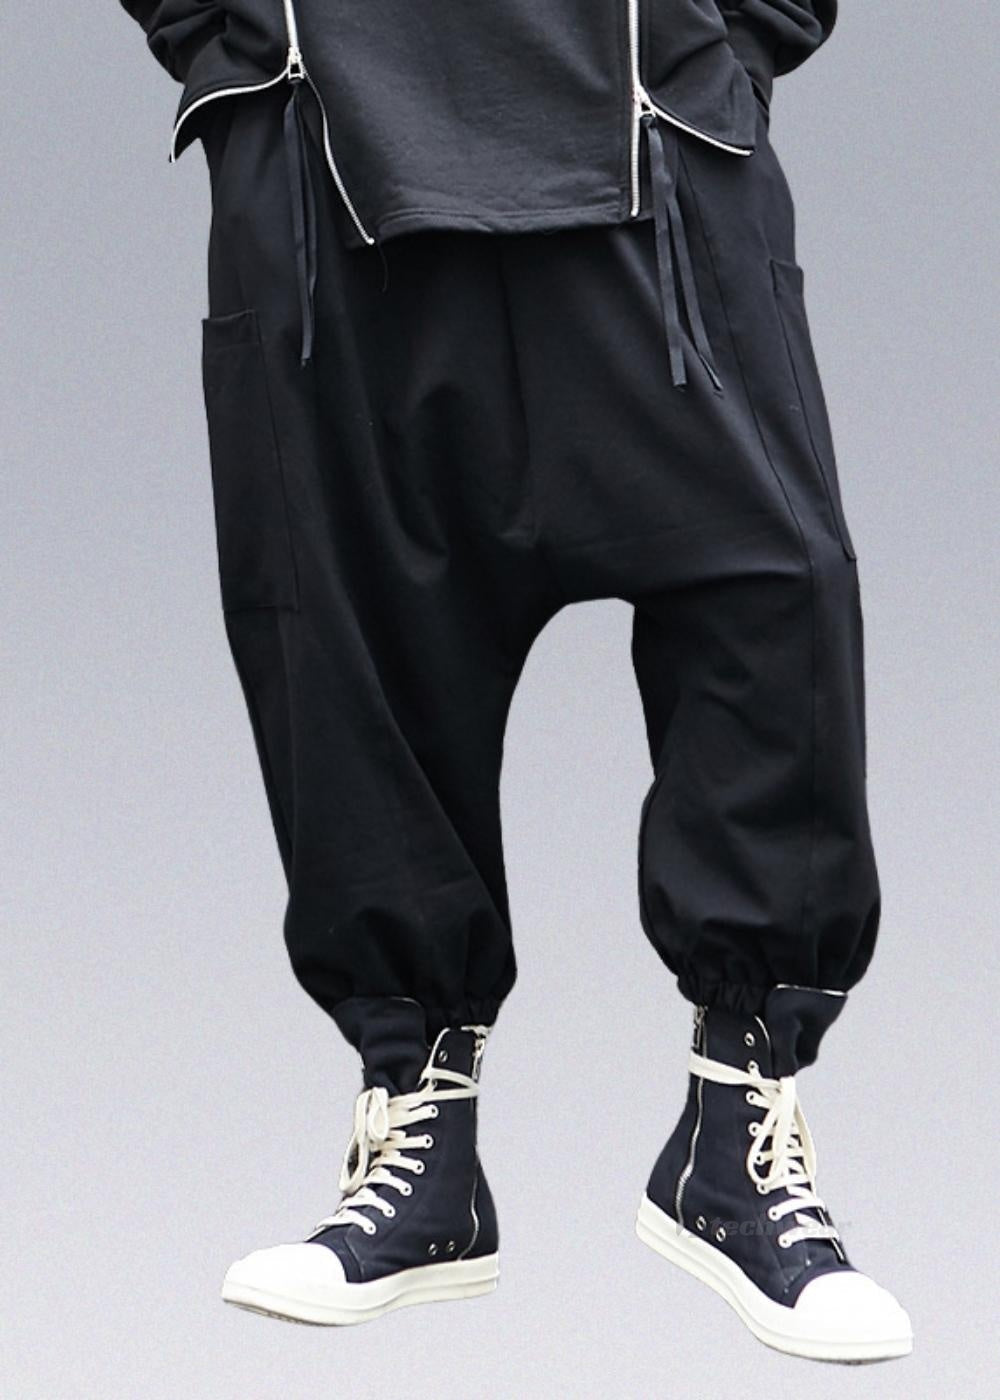 Black Crotch Pants - Darkwear Pants - X